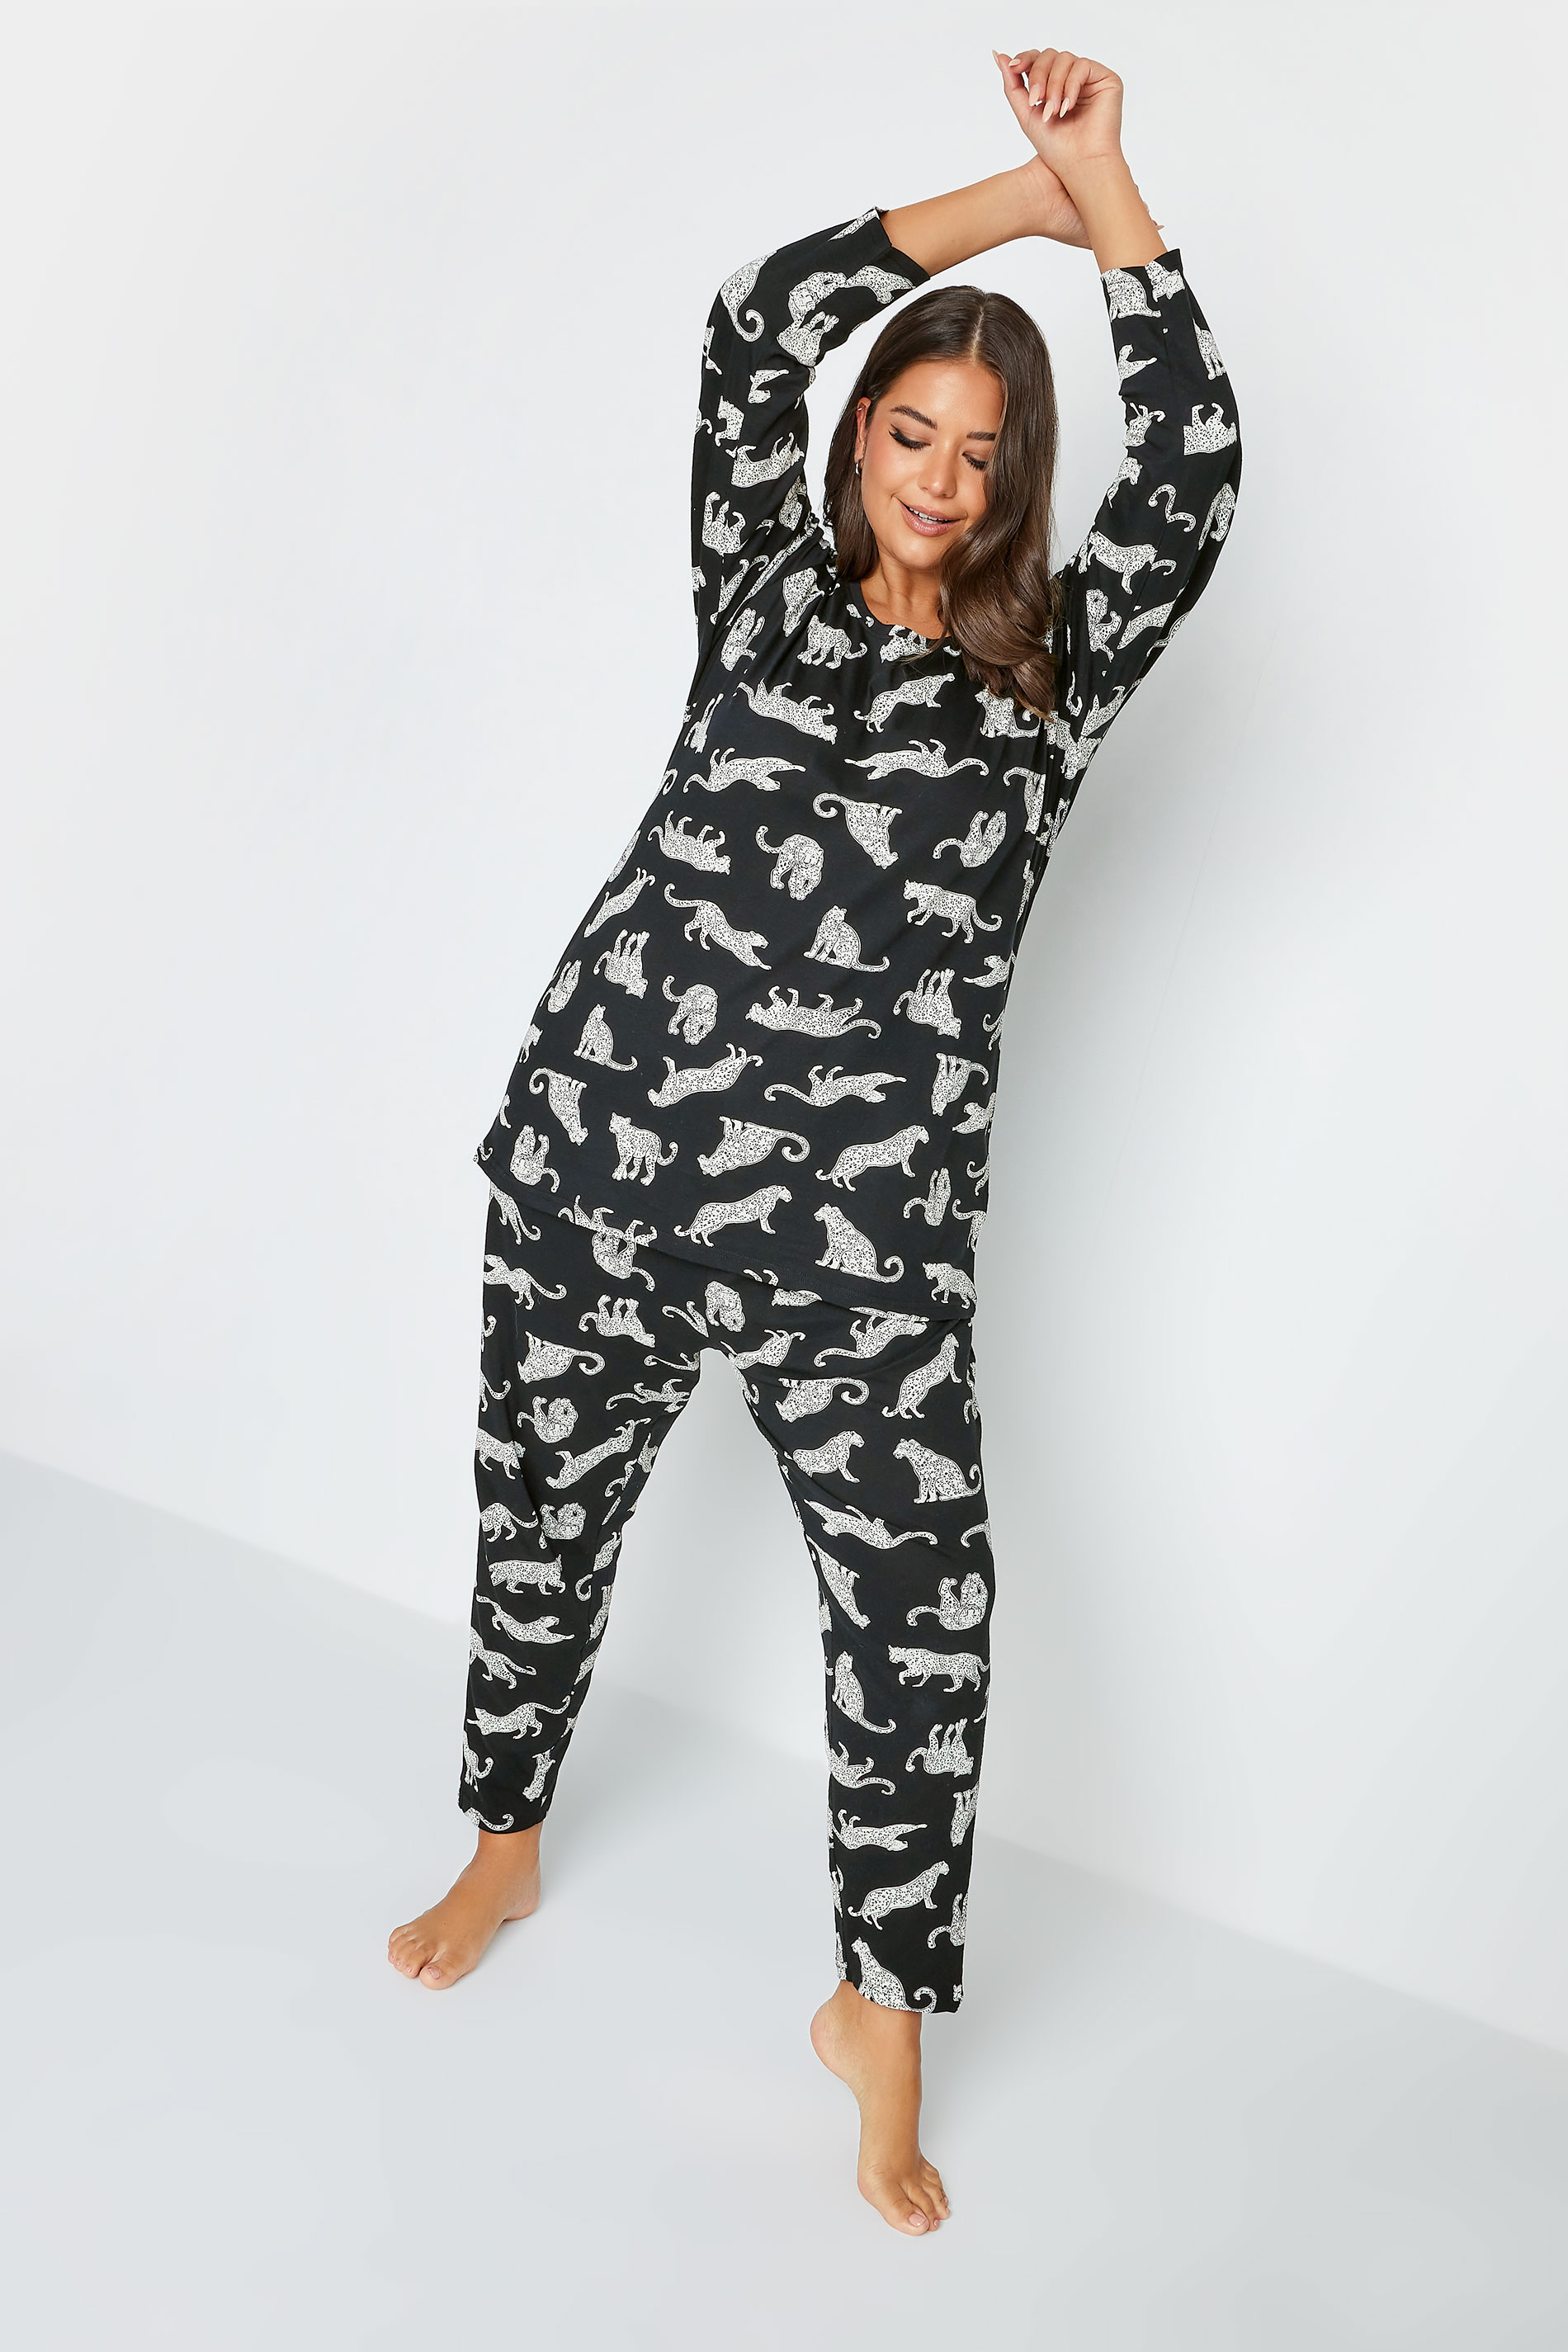 YOURS Curve Black Animal Print Pyjama Set | Yours Clothing 3